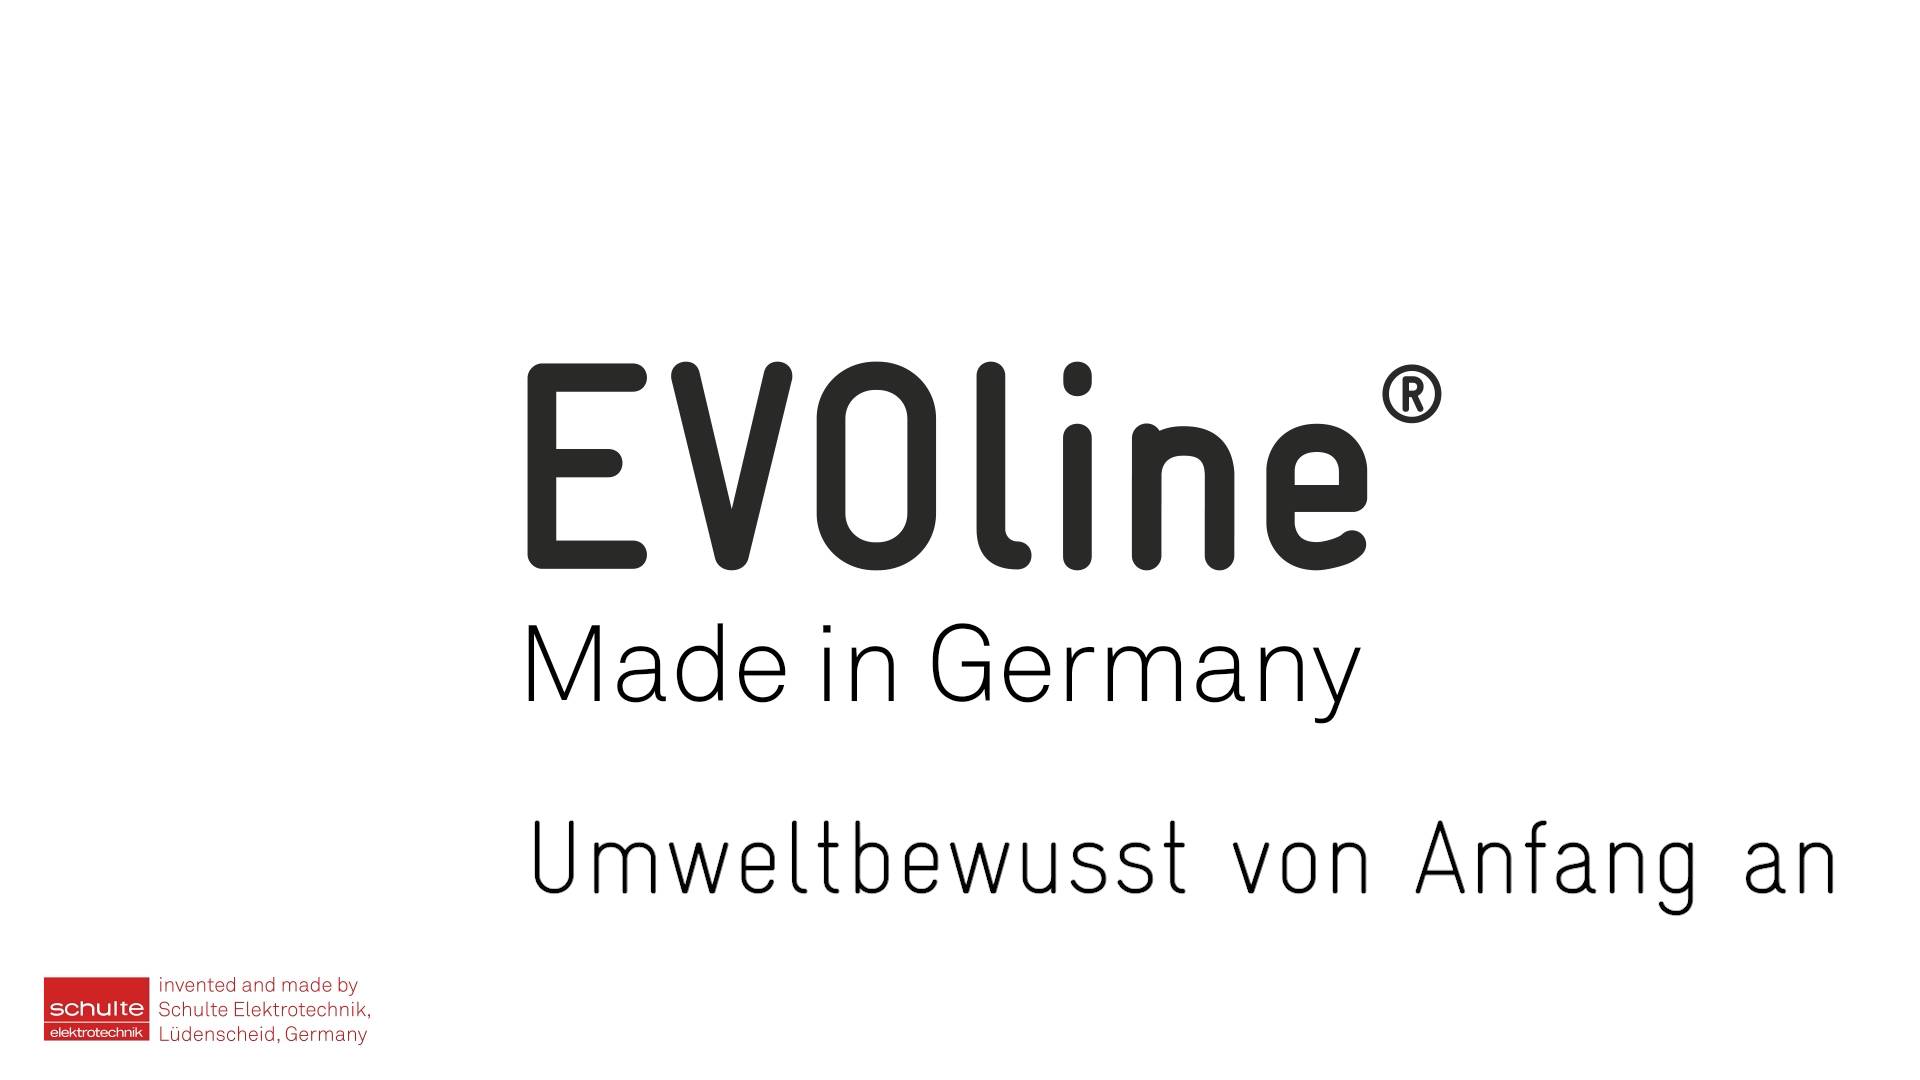 EVOline made in Germany